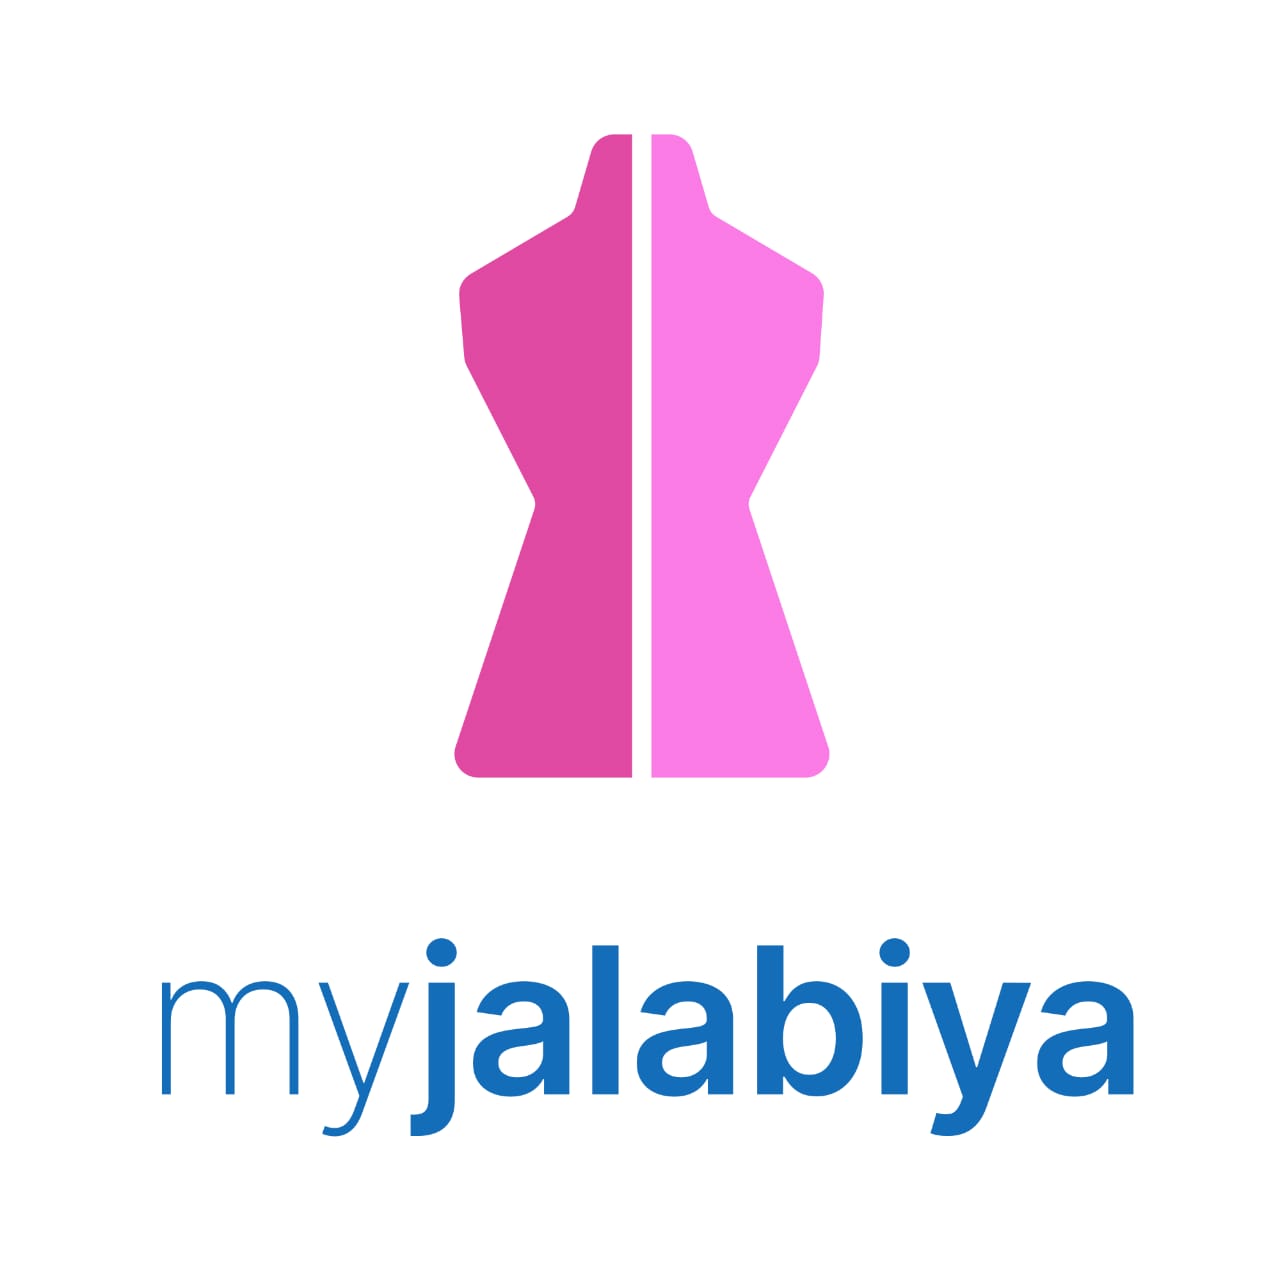 My jalabiya